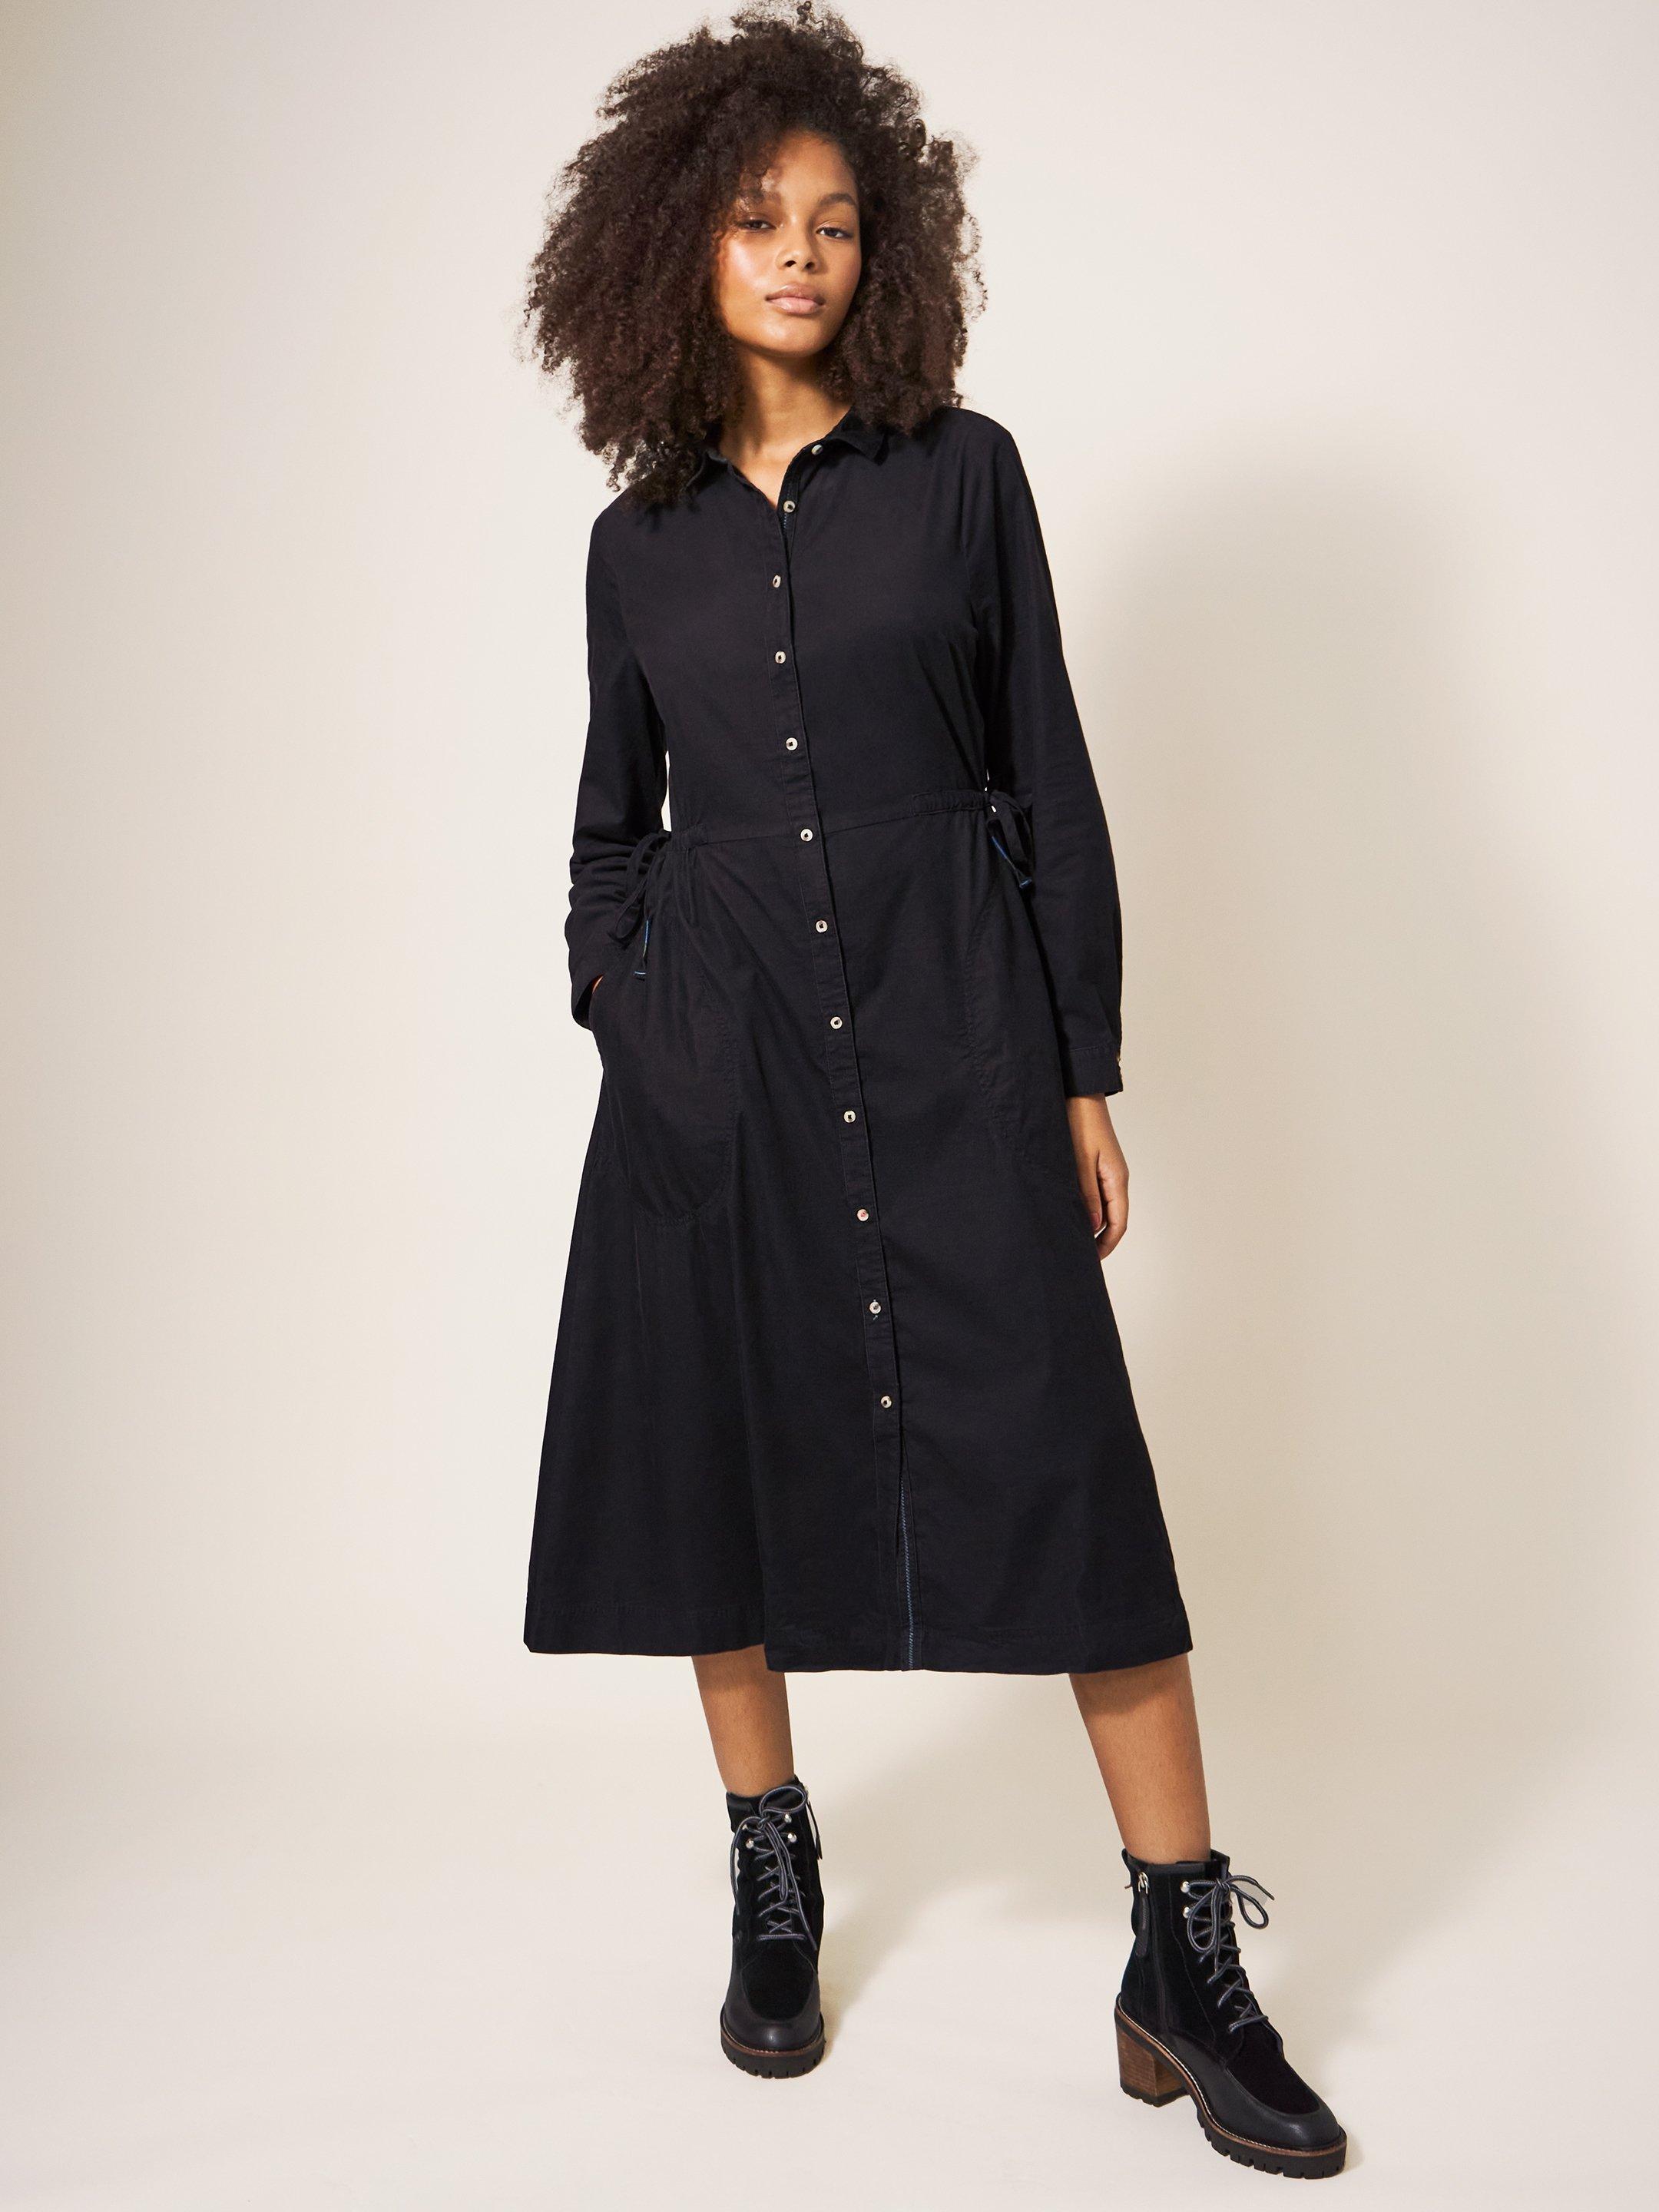 Jade Cord Shirt Midi Dress in PURE BLK - MODEL DETAIL